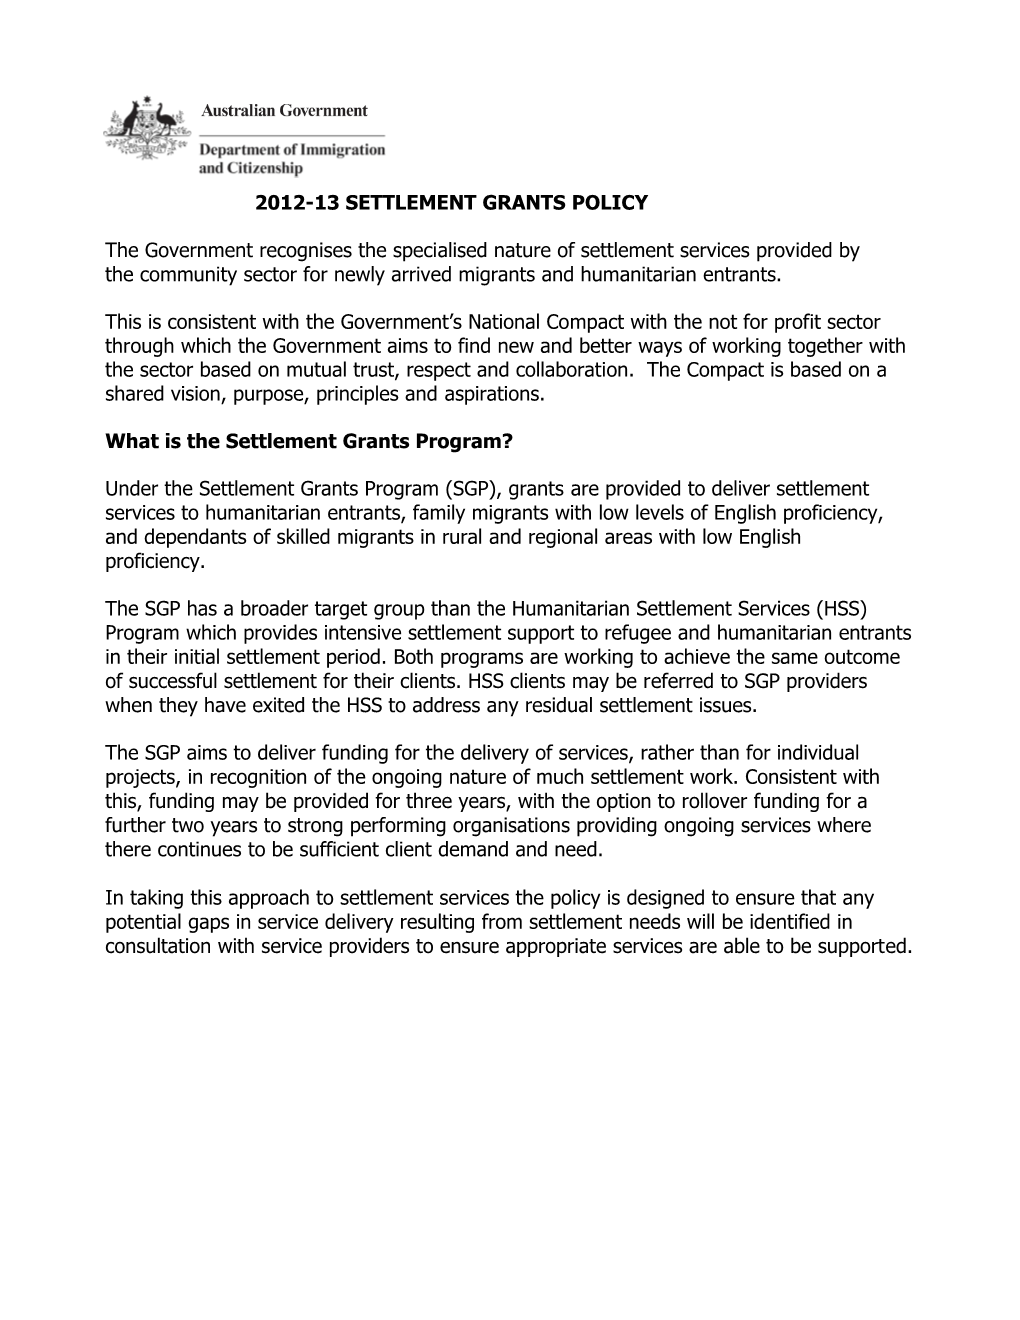 Settlement Grants Program 2012-13 - Policy